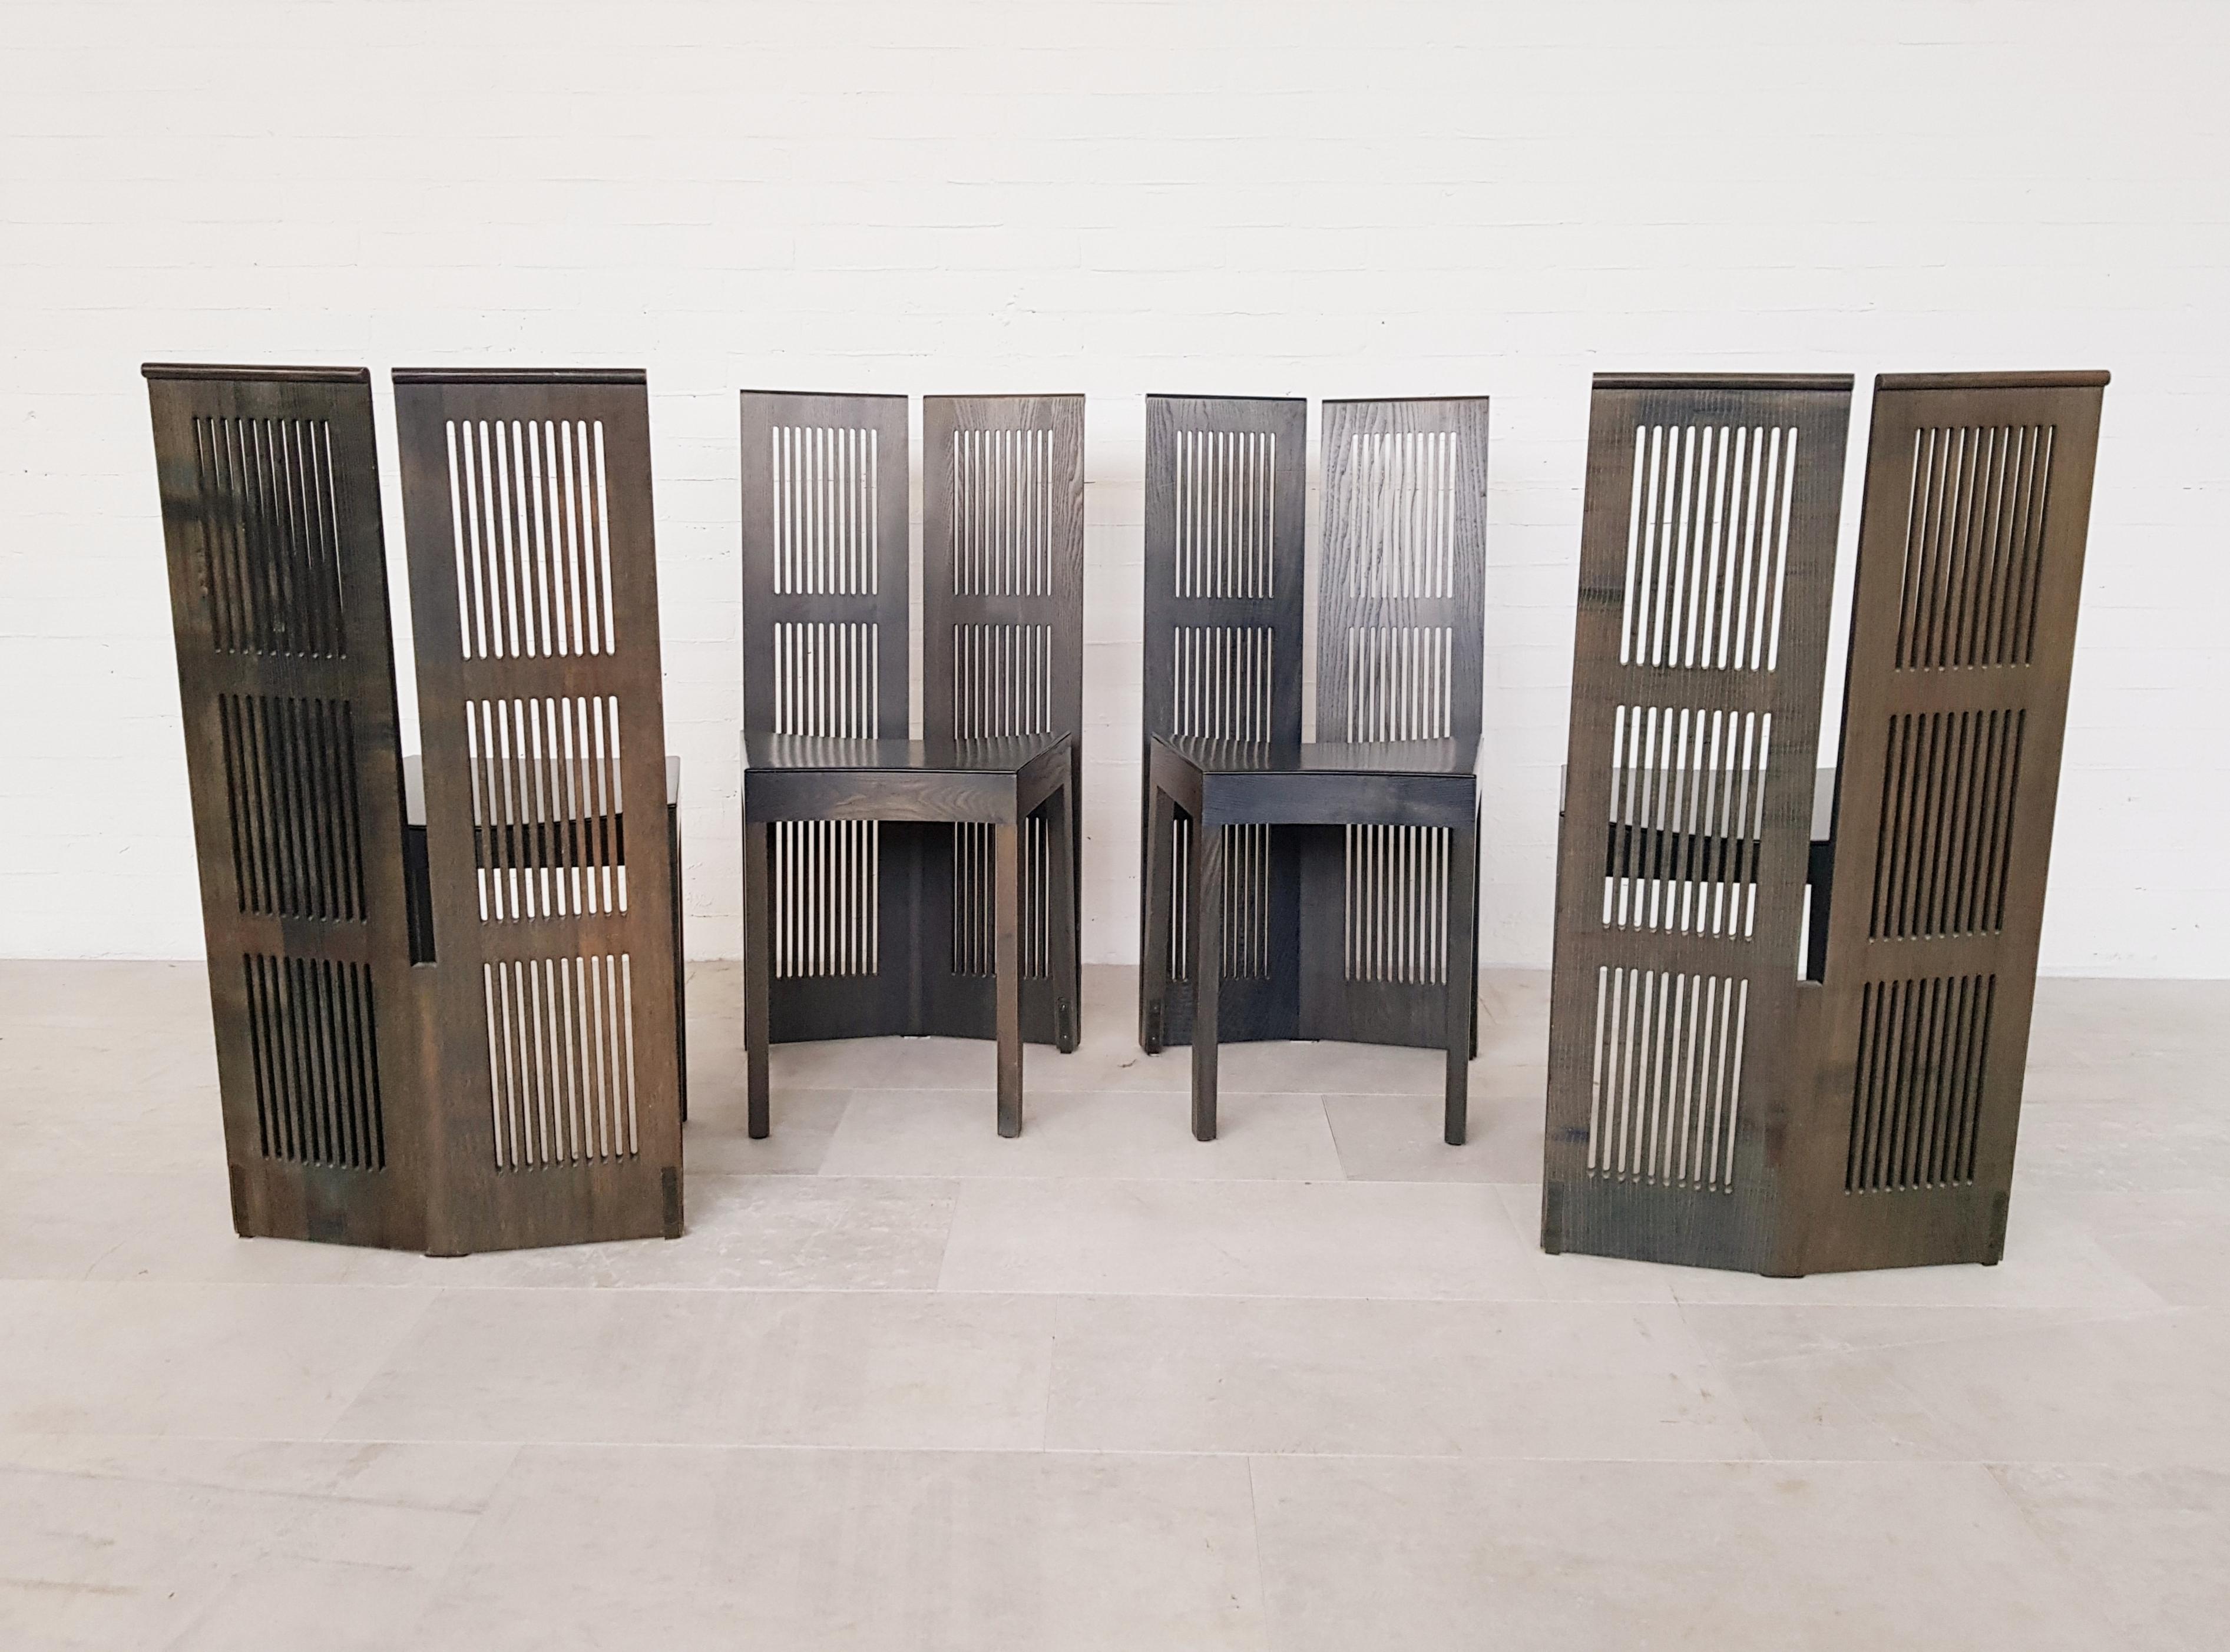 European Lubbeka Chairs by Andrea Branzi for Cassina